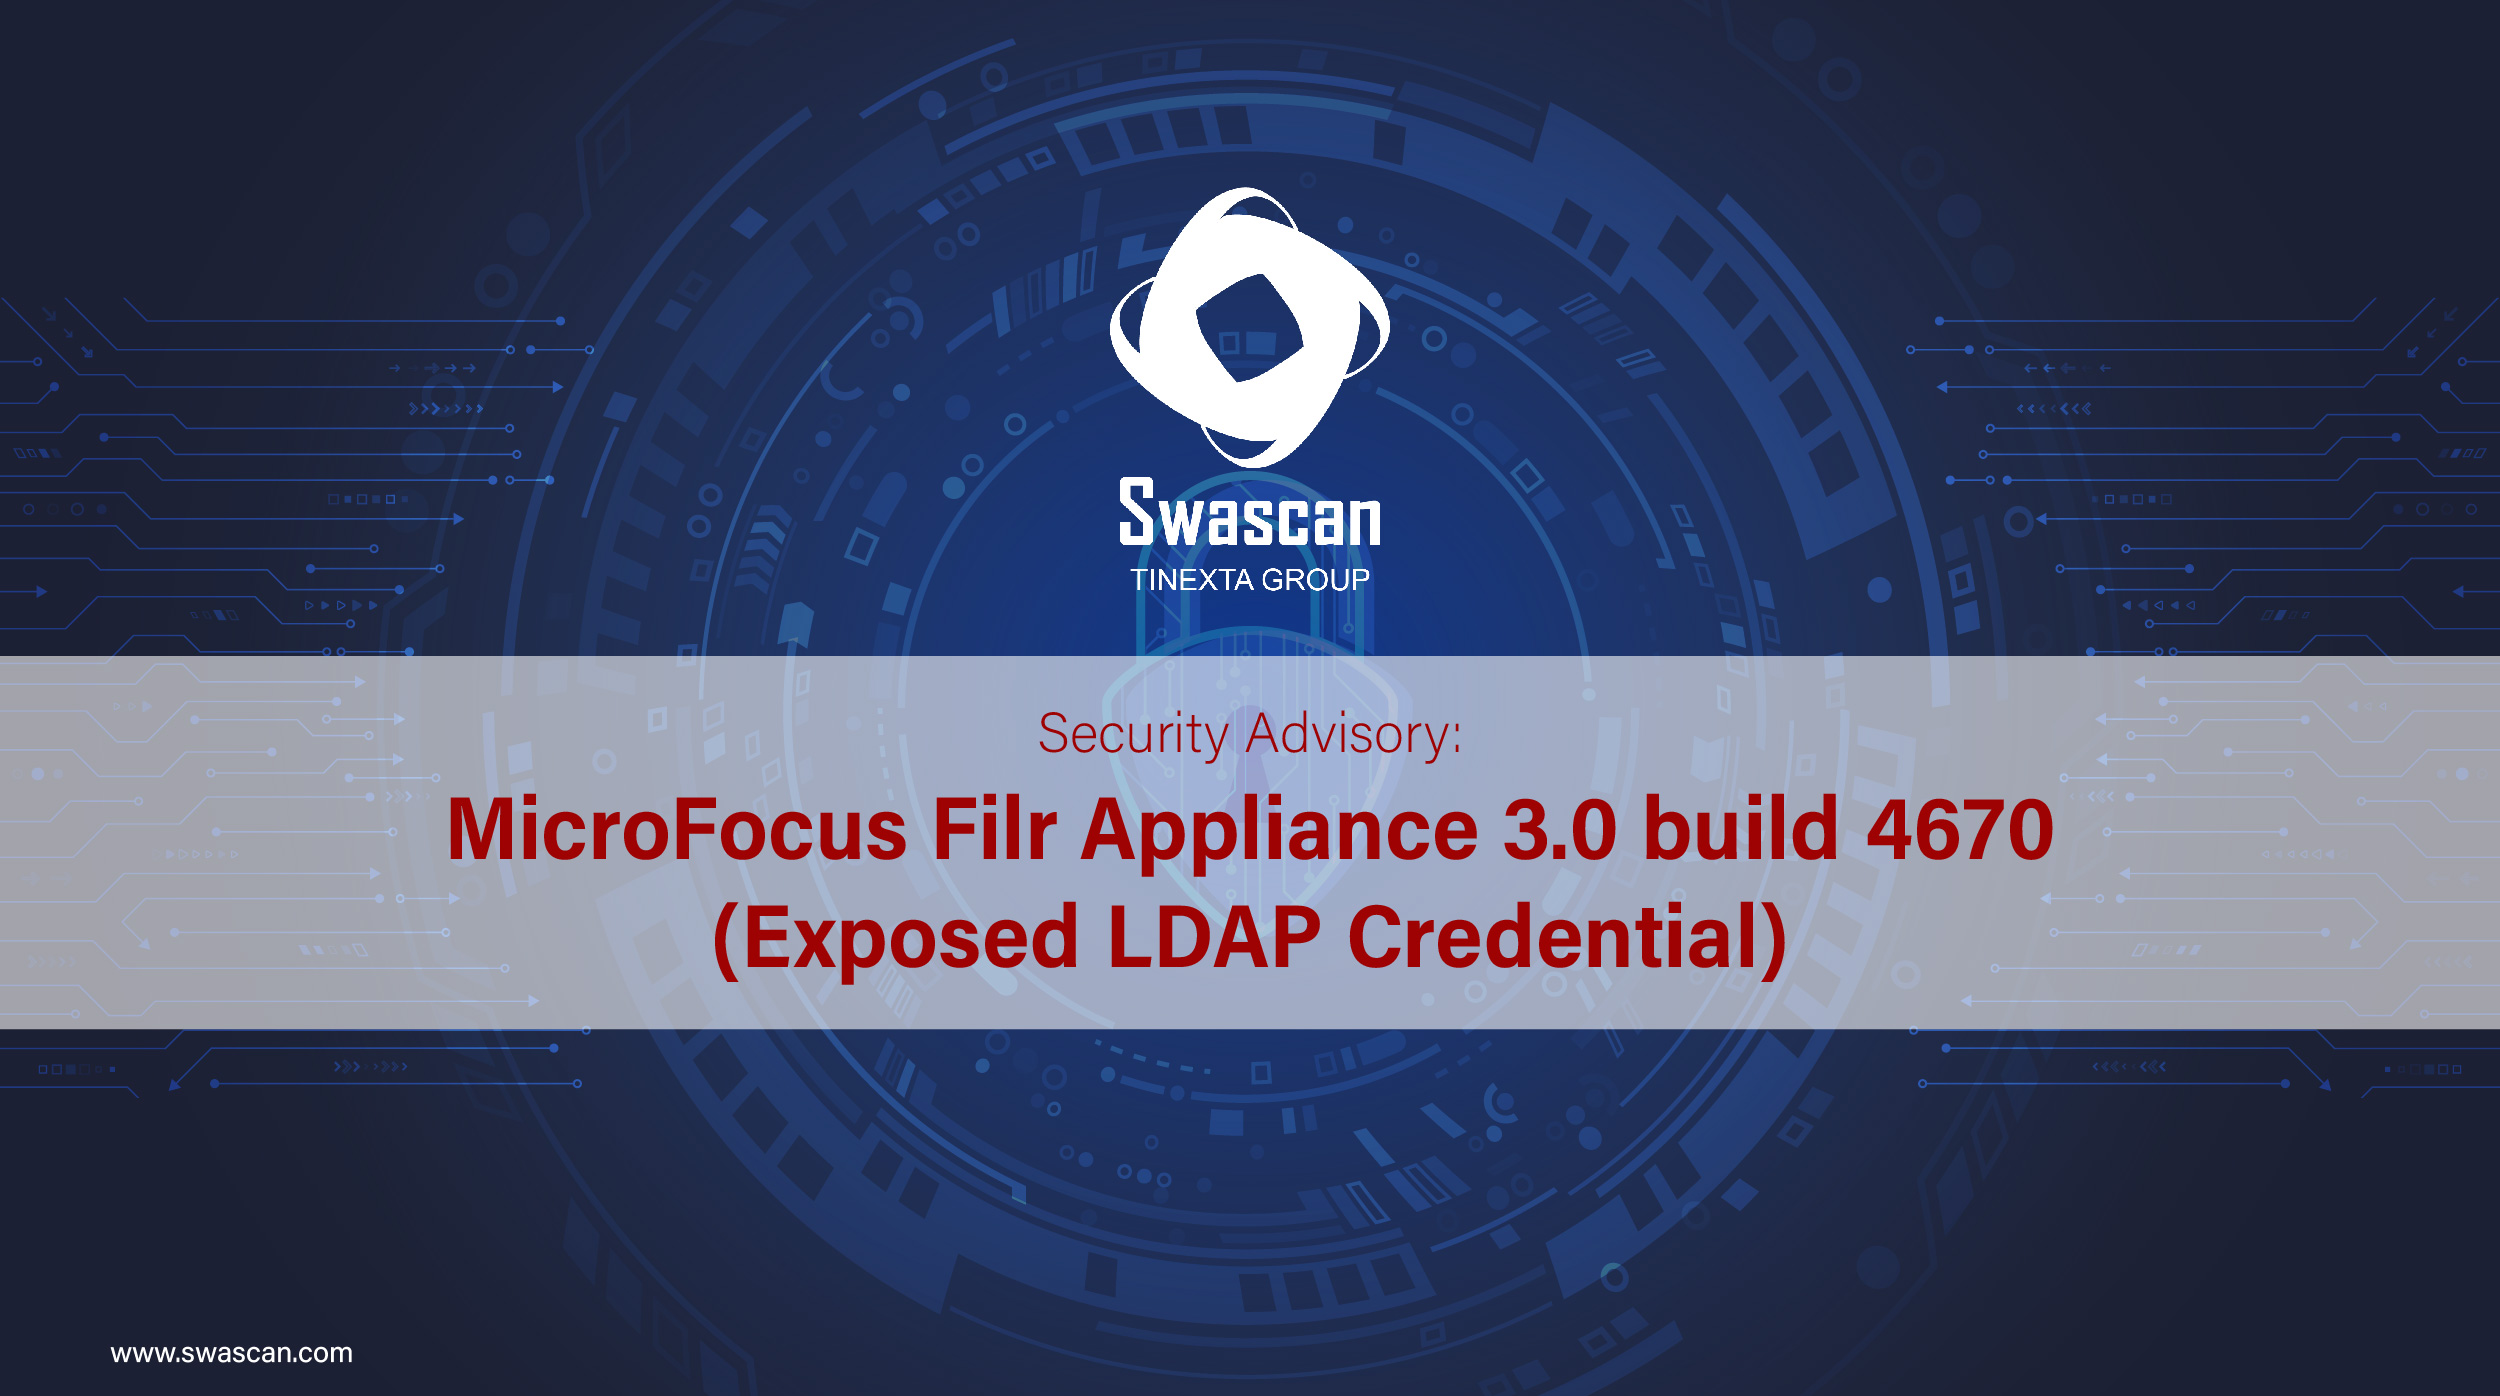 Security Advisory: MicroFocus Filr Appliance 3.0 build 4670 (Exposed LDAP Credential)